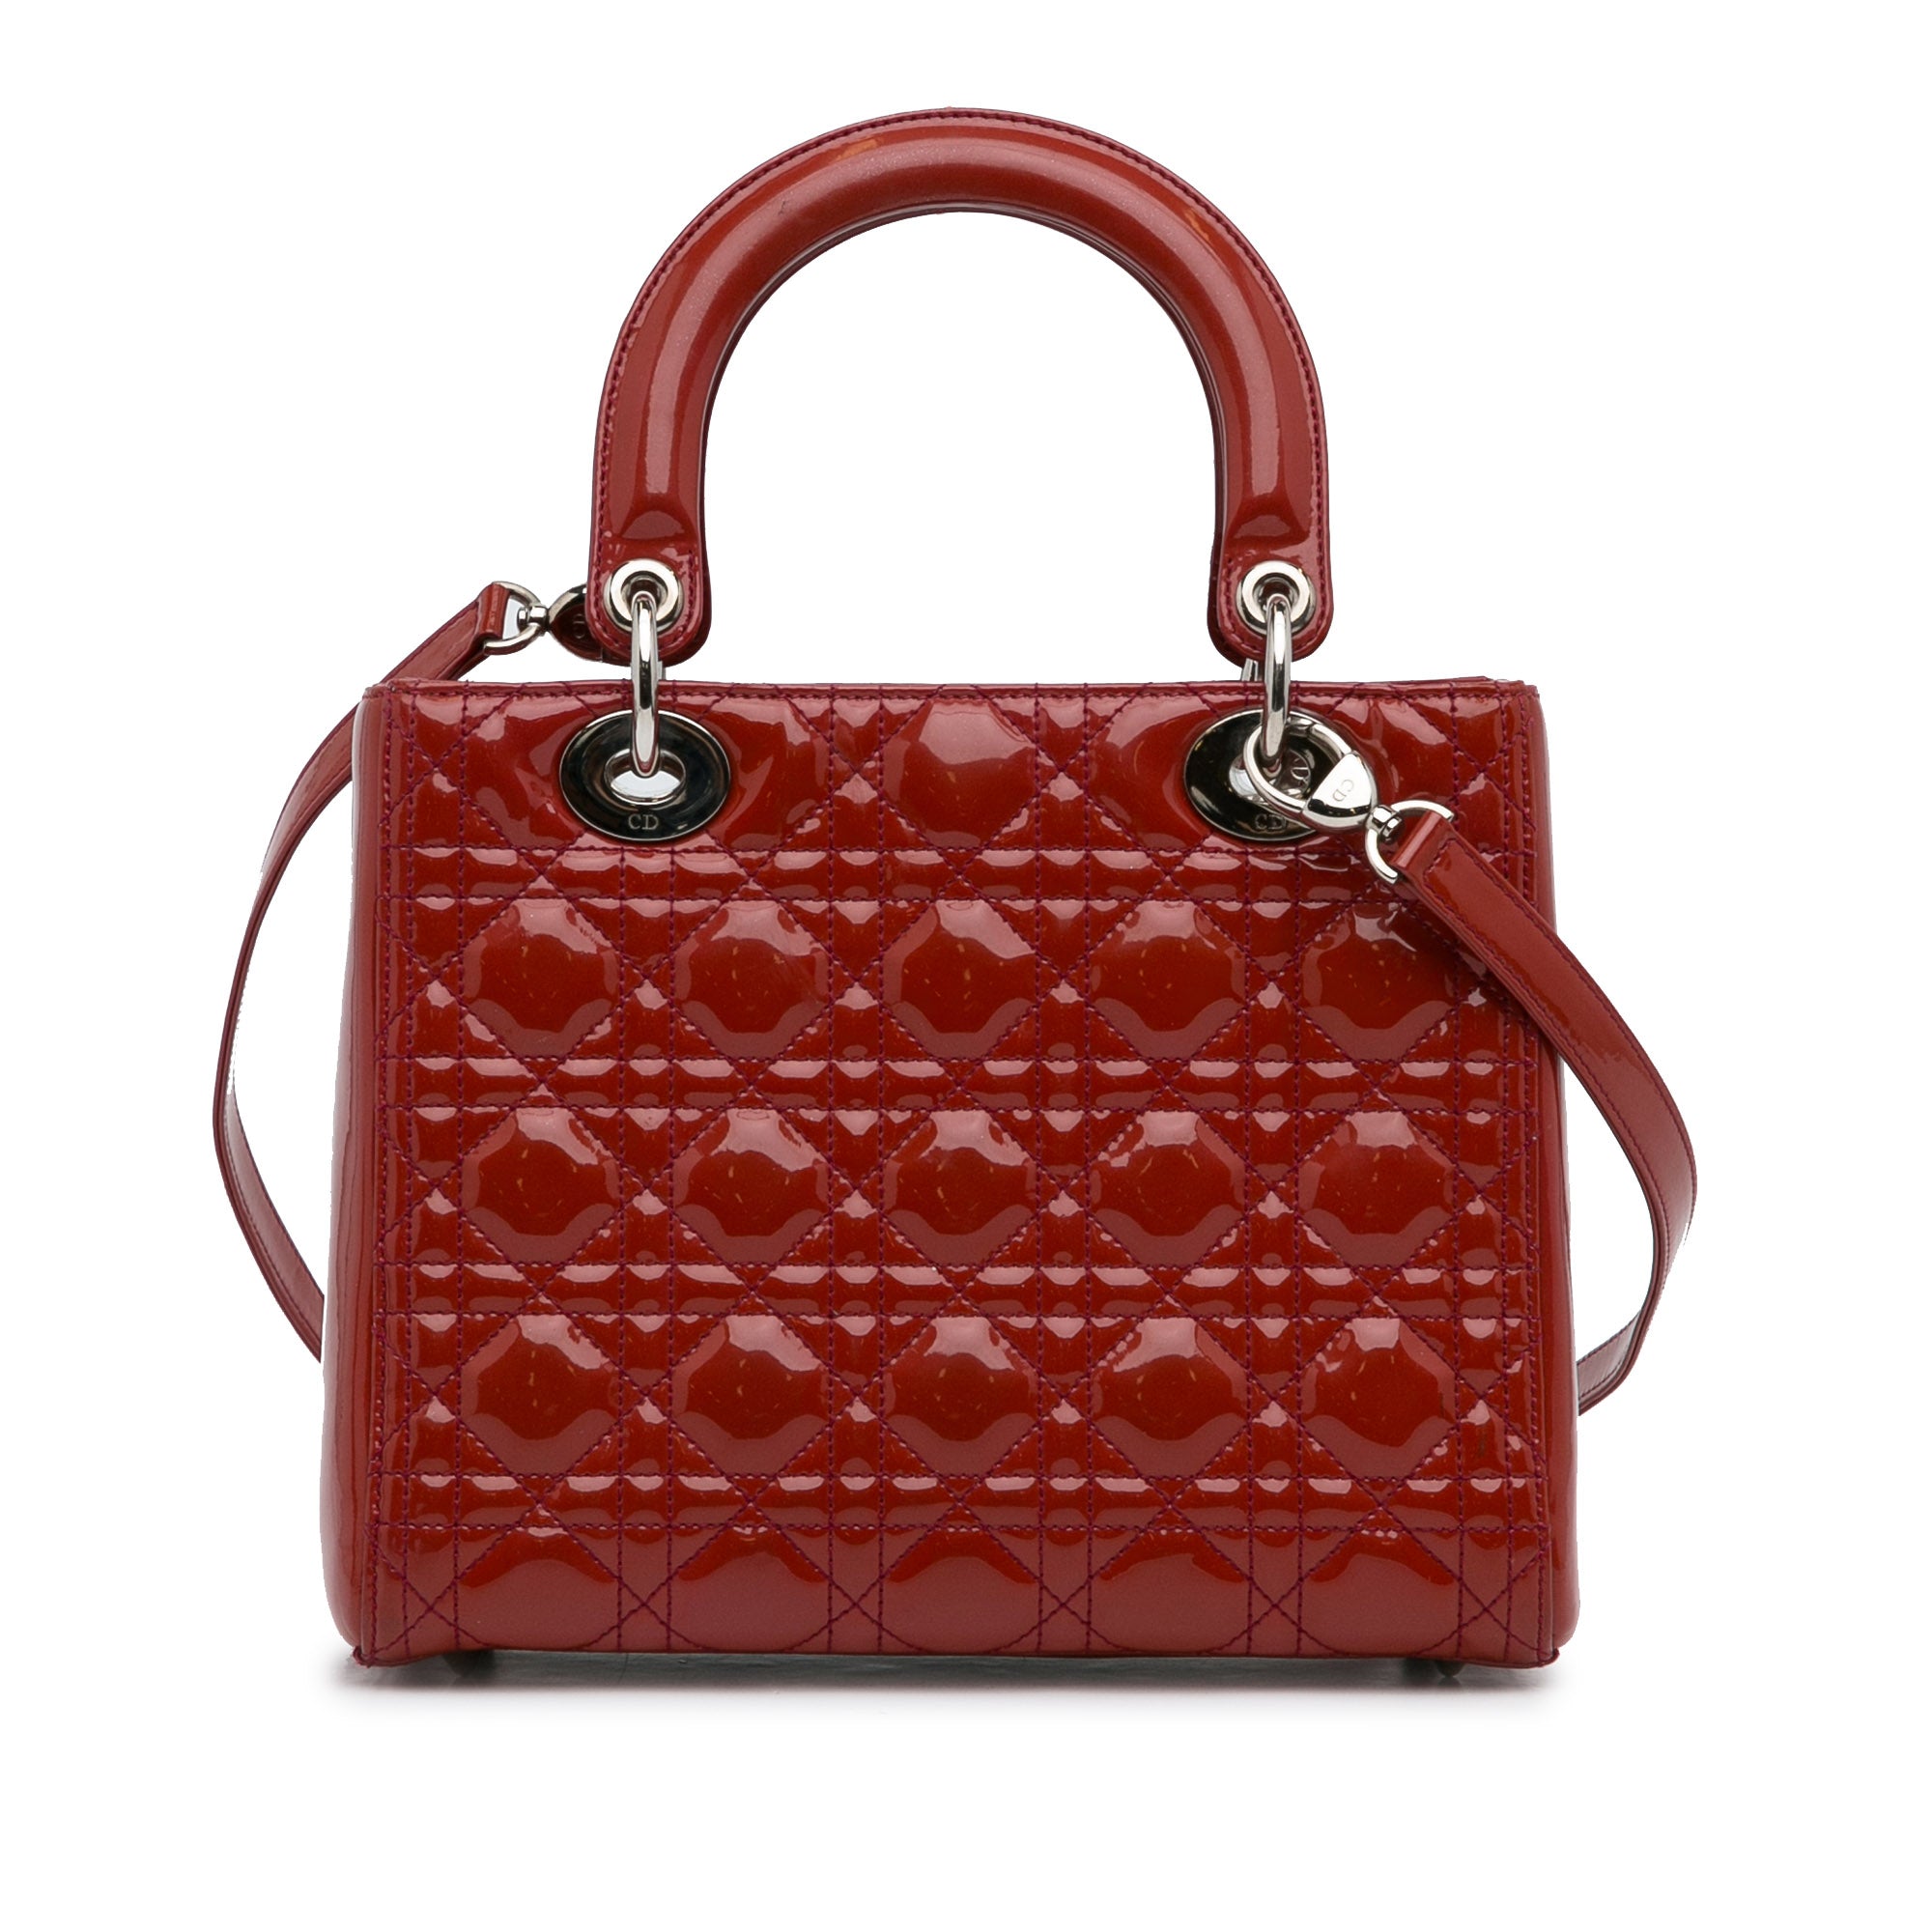 Dior Lady Dior Medium Red Patent Leather